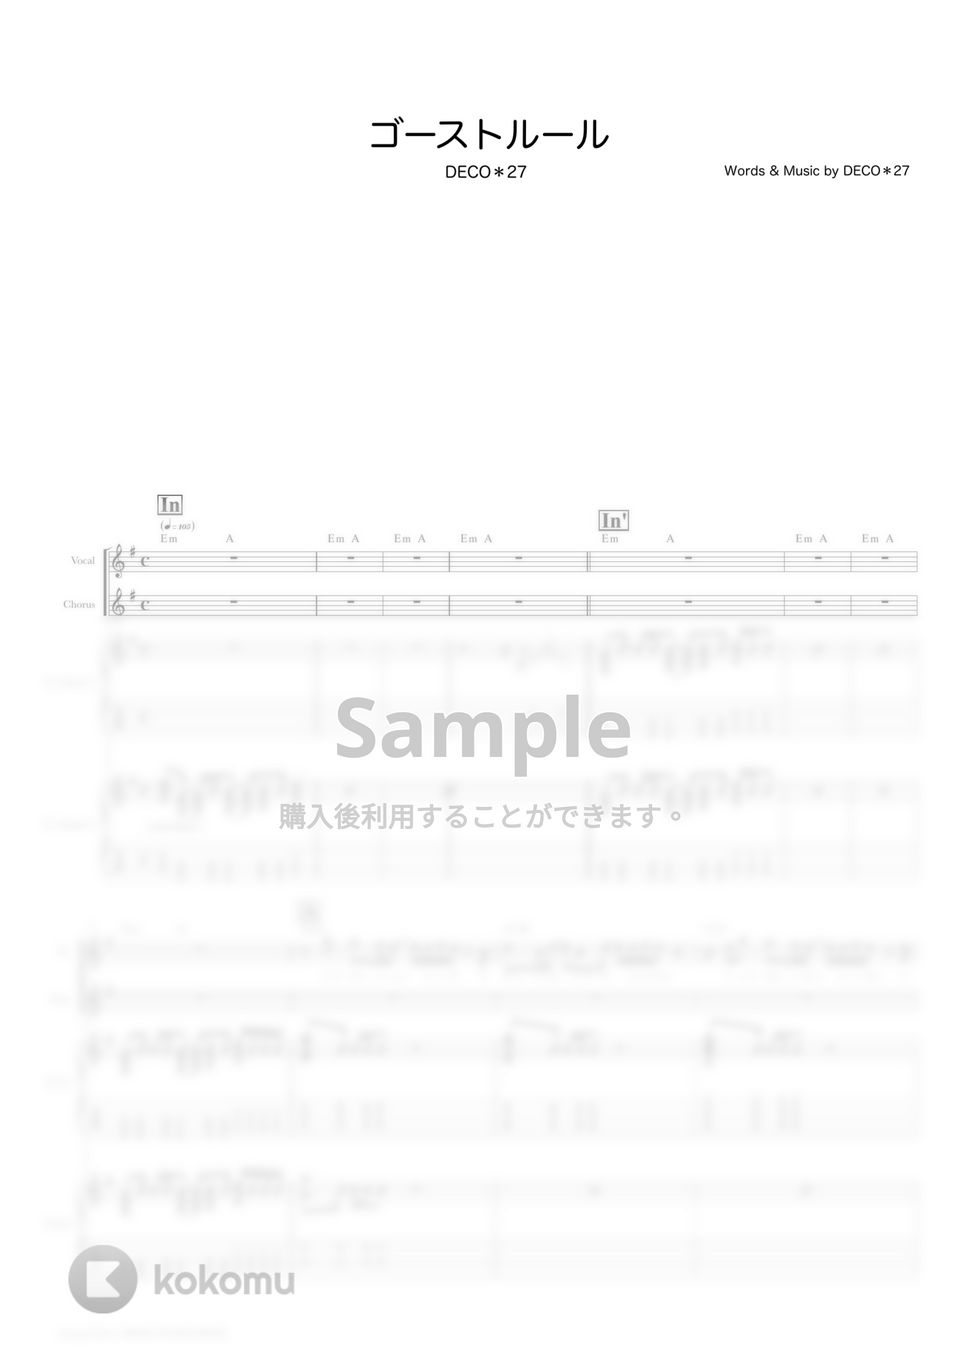 DECO＊27 - ゴーストルール (ギタースコア・歌詞・コード付き) by TRIAD GUITAR SCHOOL